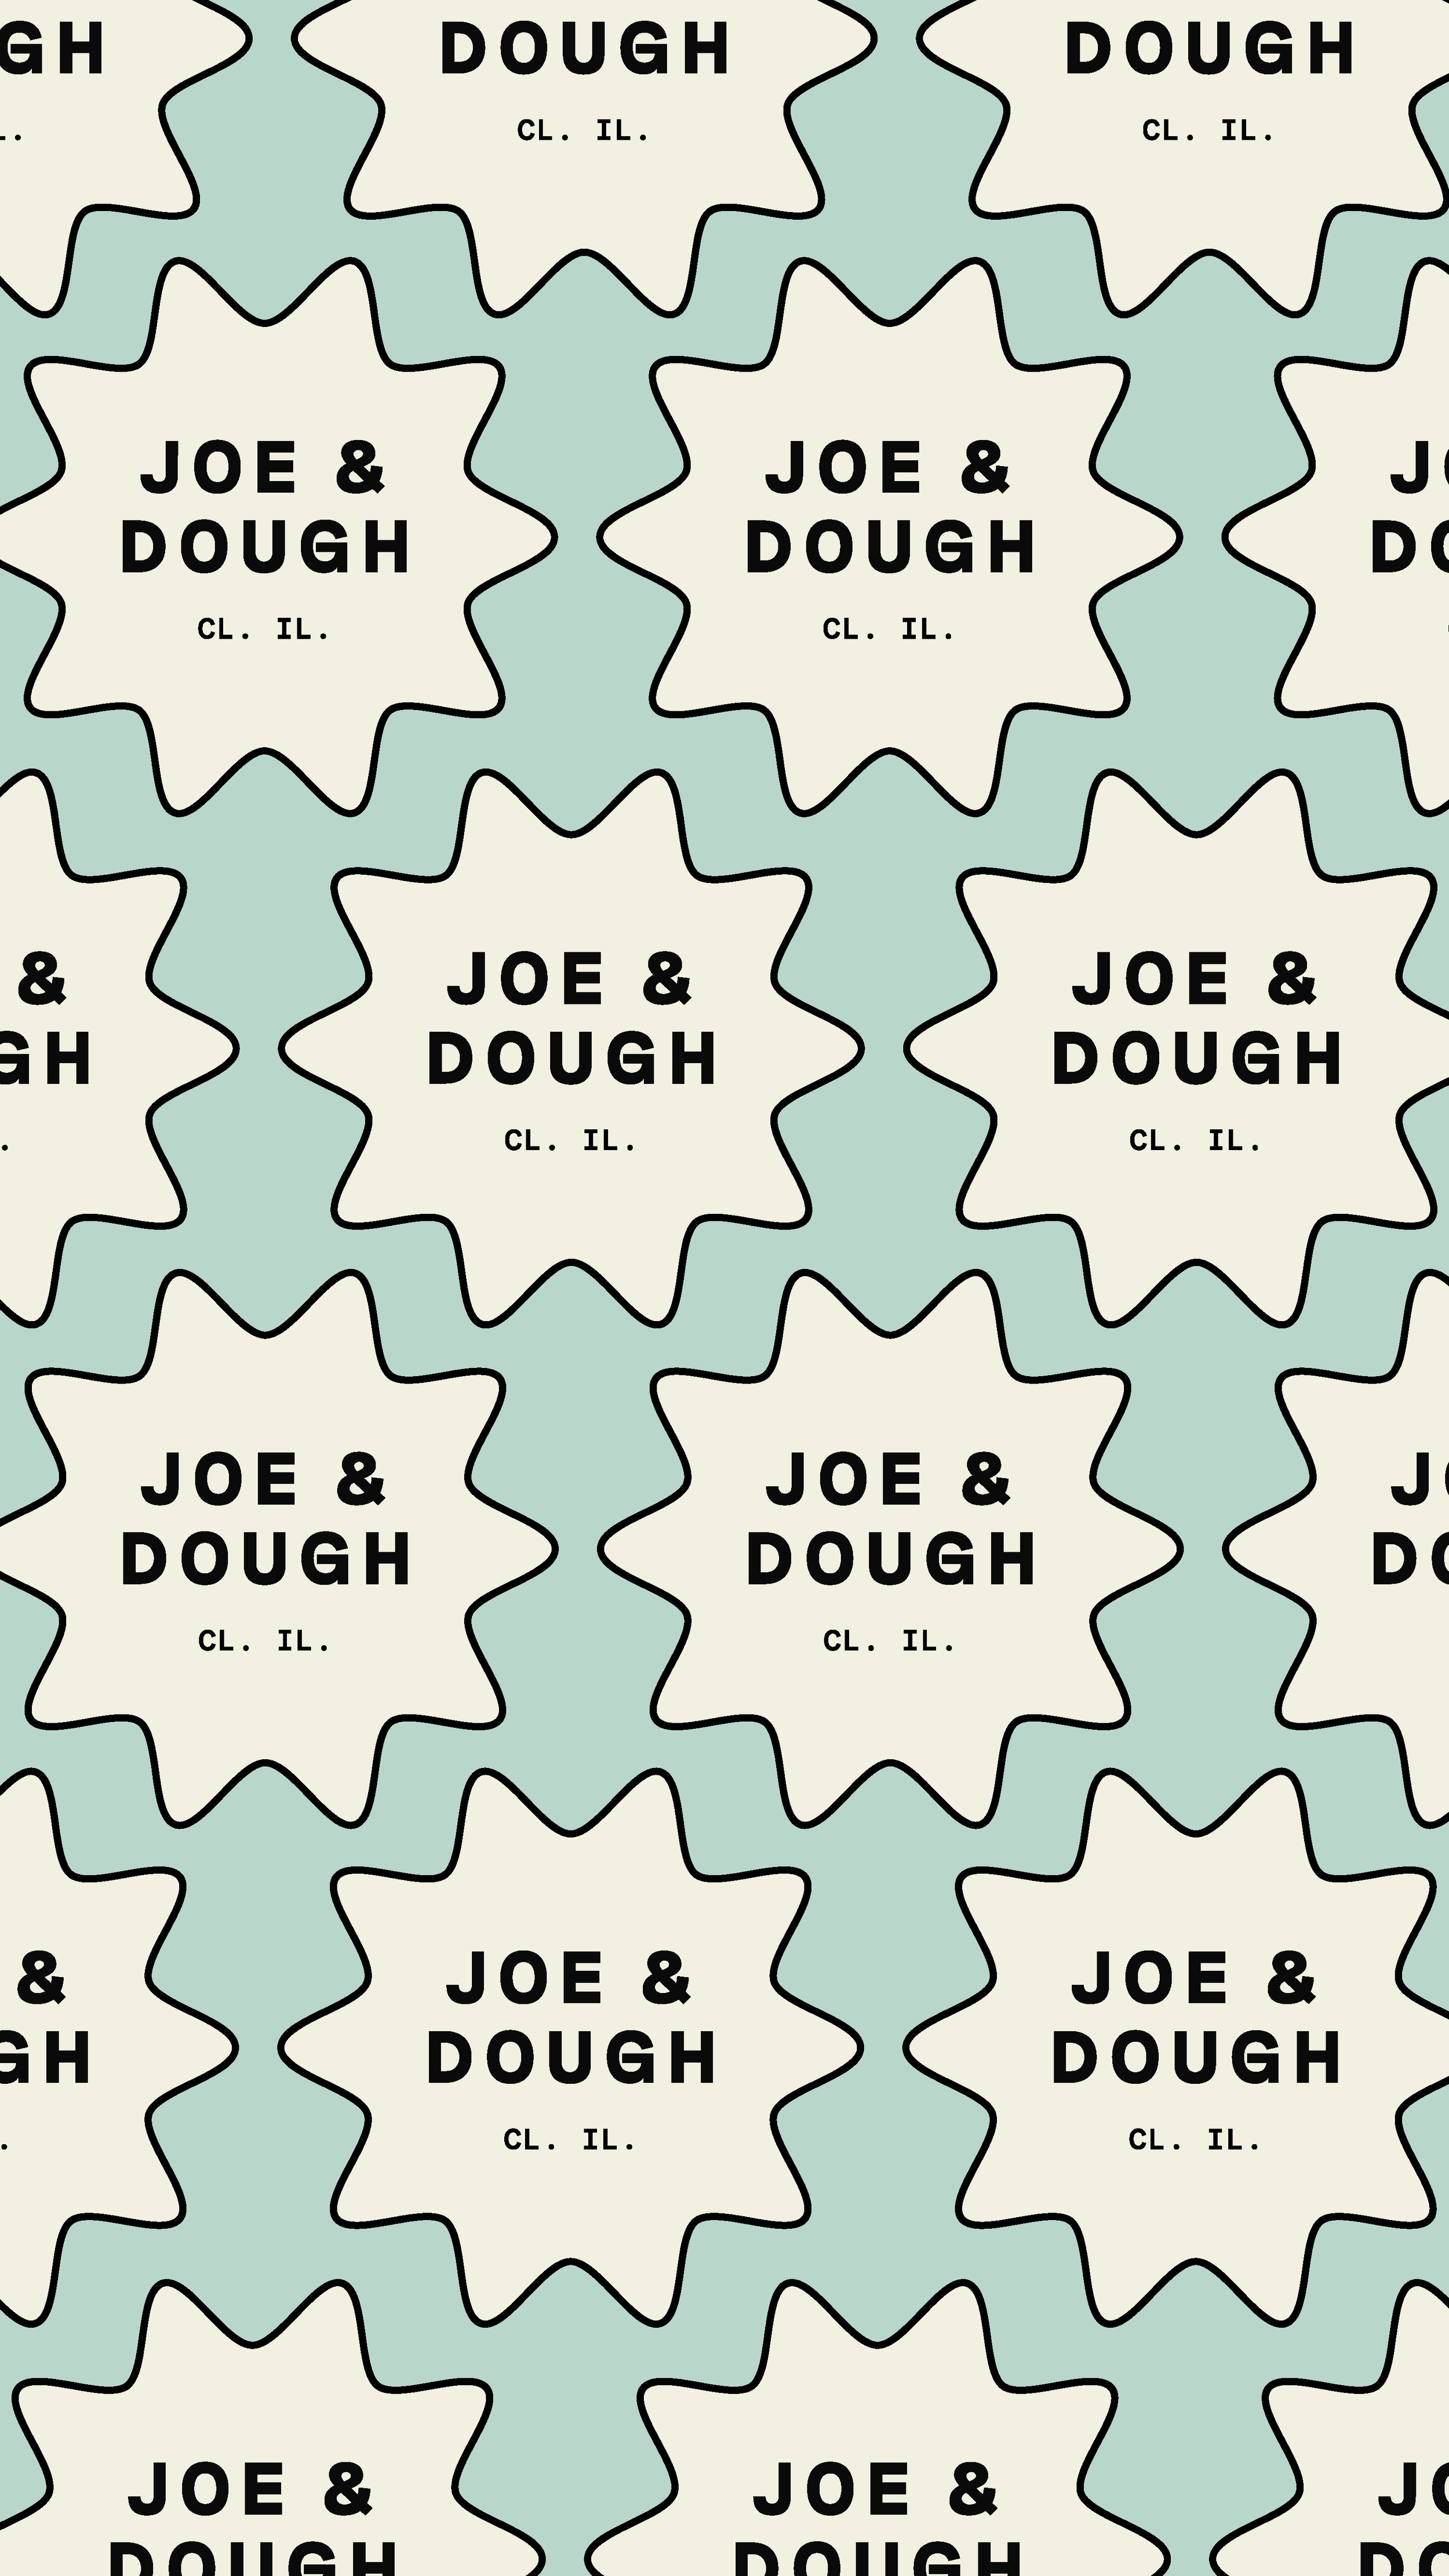 joe+dough-launchgraphics4.png